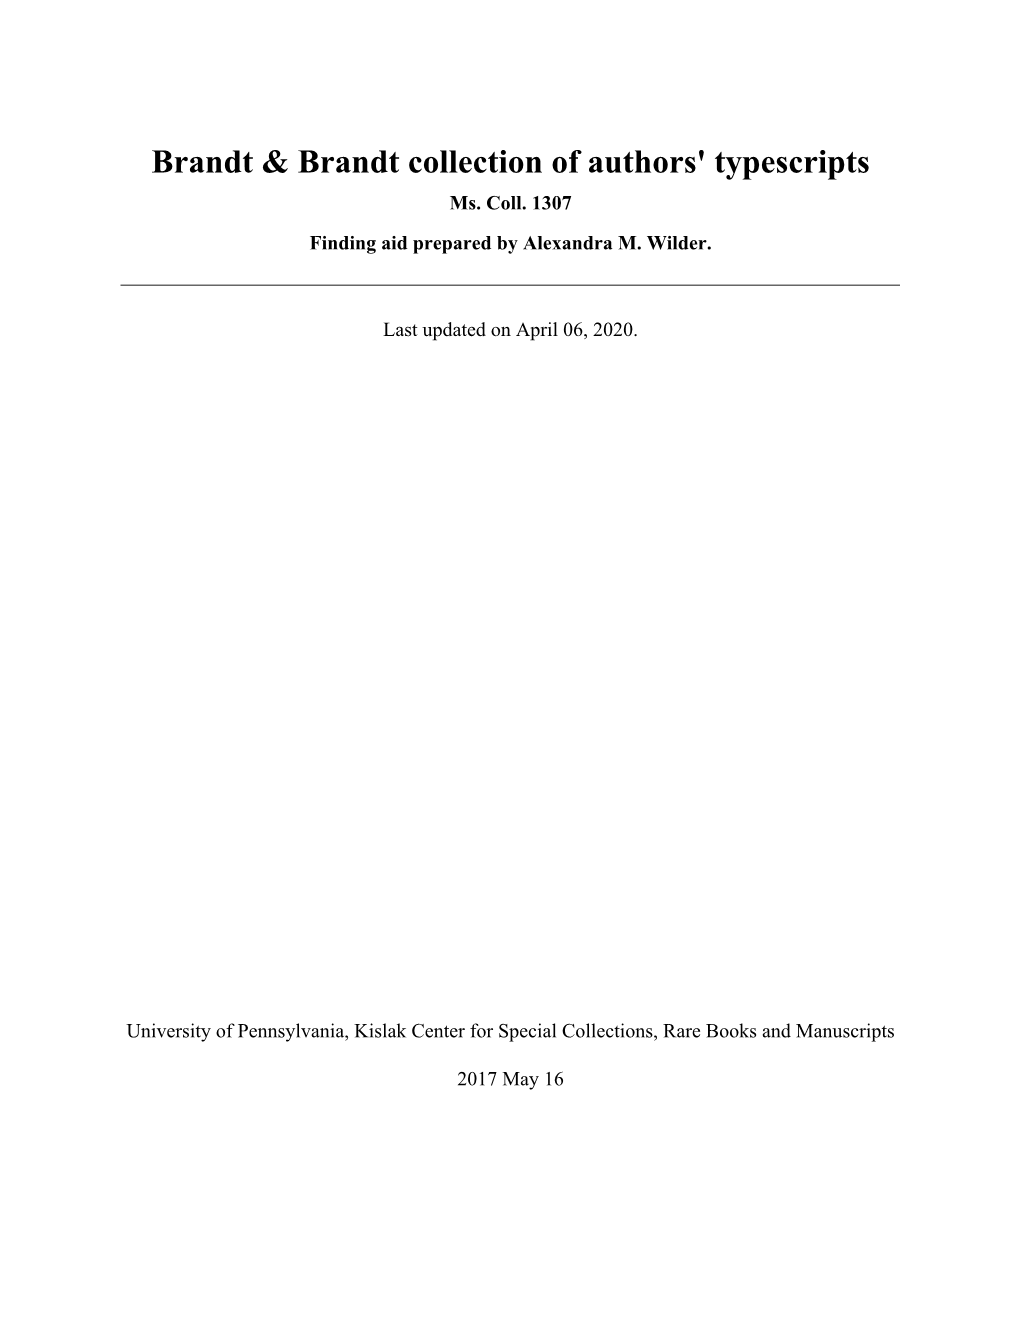 Brandt & Brandt Collection of Authors' Typescripts